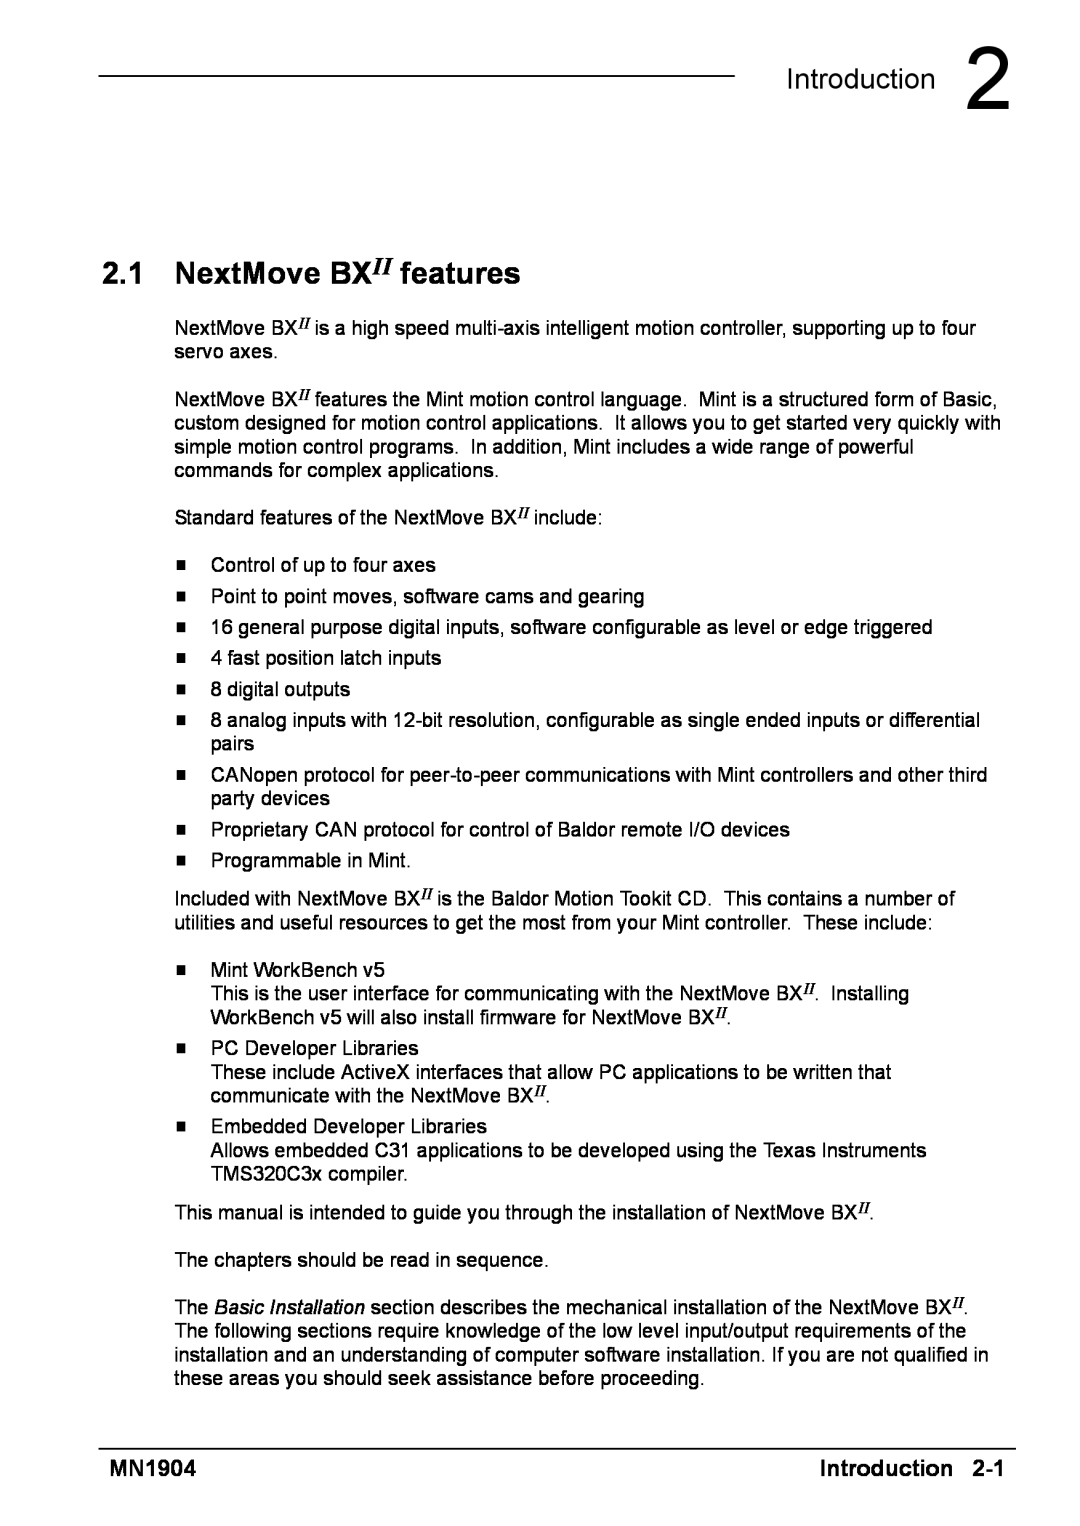 Baldor installation manual NextMove BXII features, Introduction 